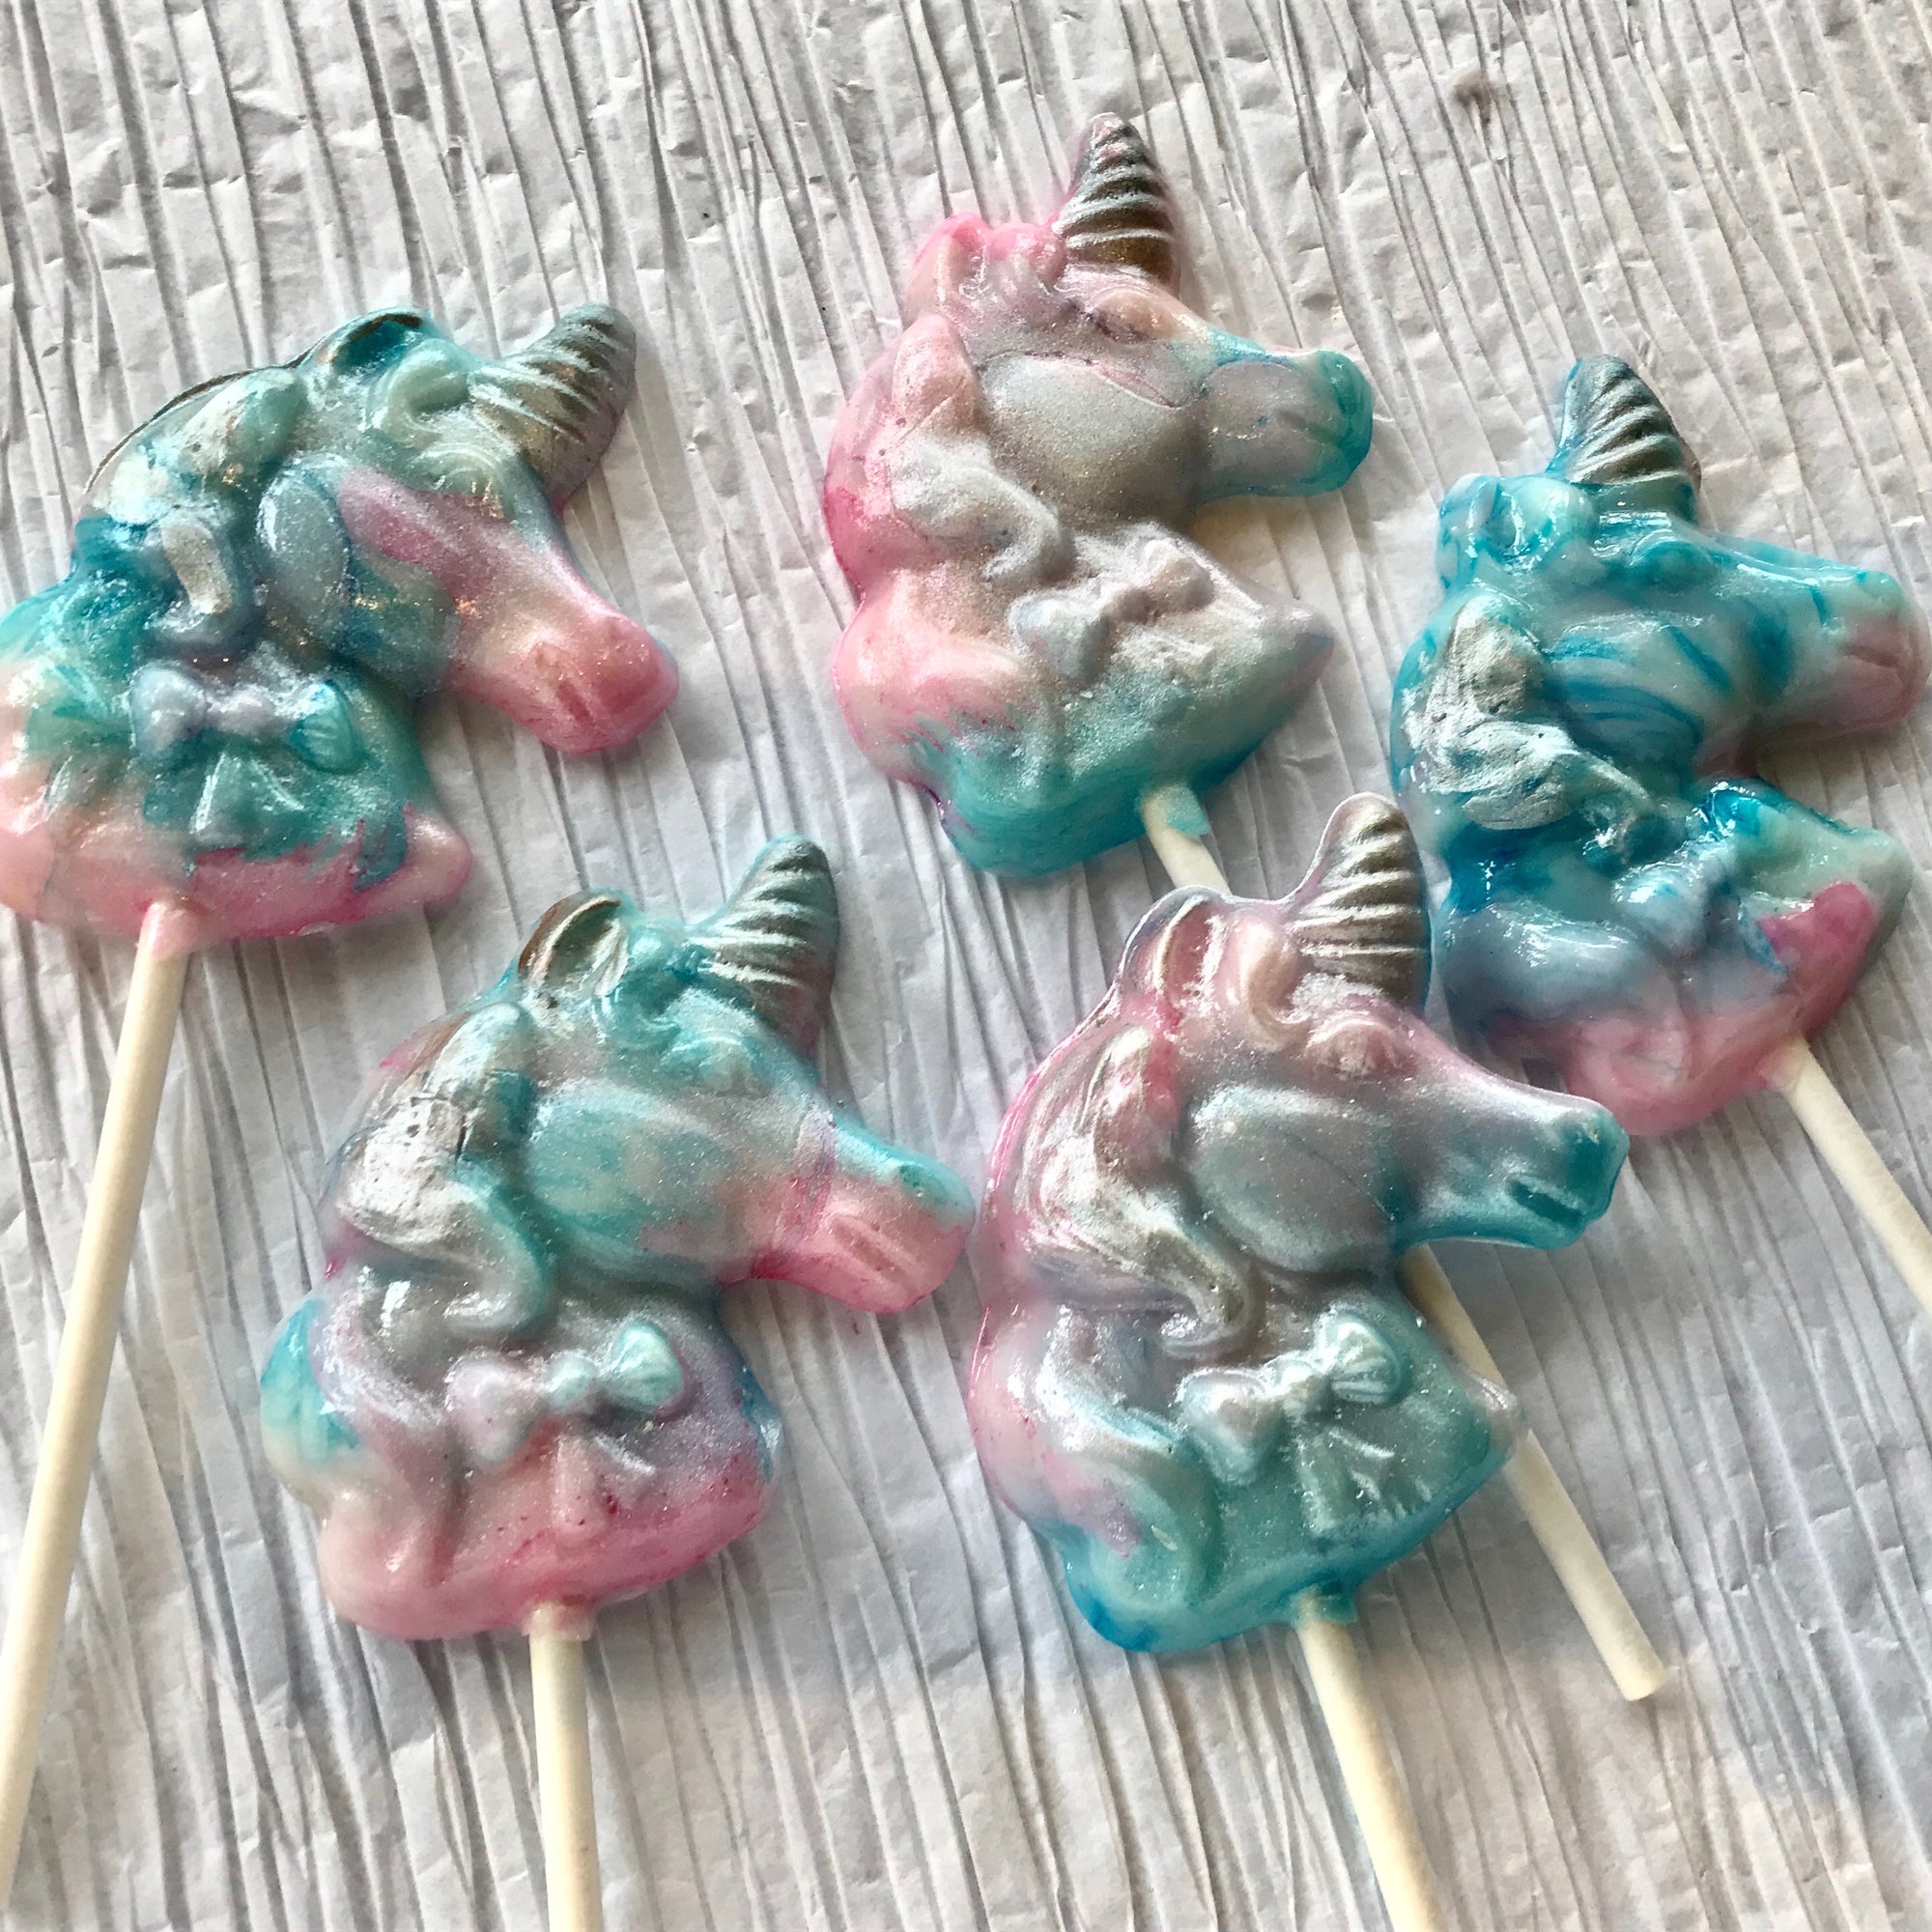 Magical Unicorn Lollipop 6-piece set by I Want Candy